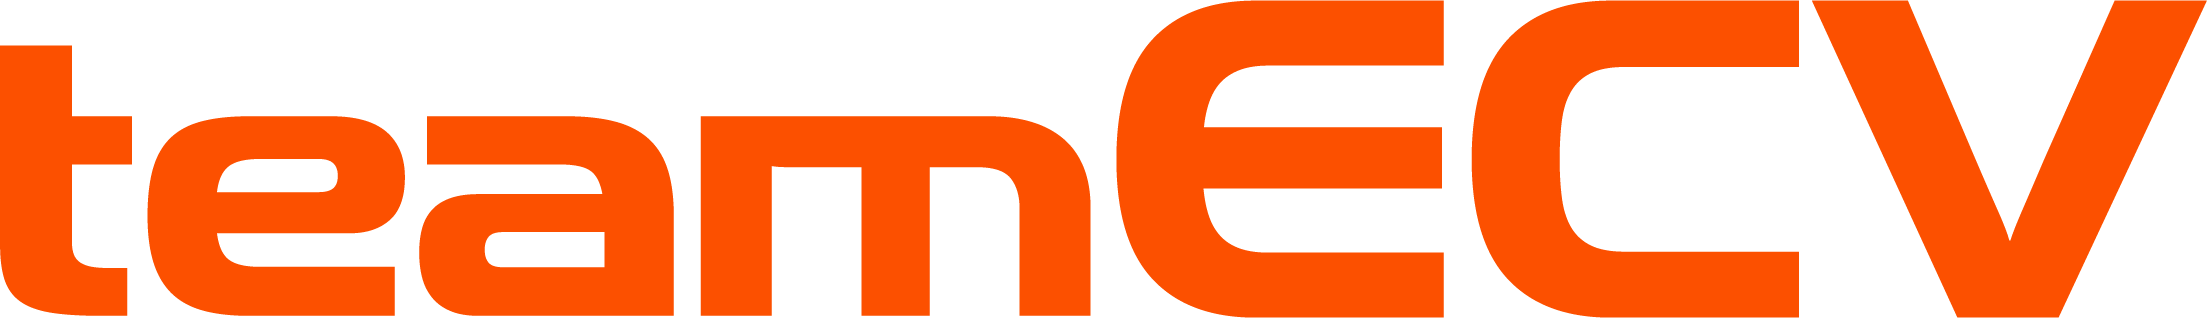 Eastside orange horizontal Logo